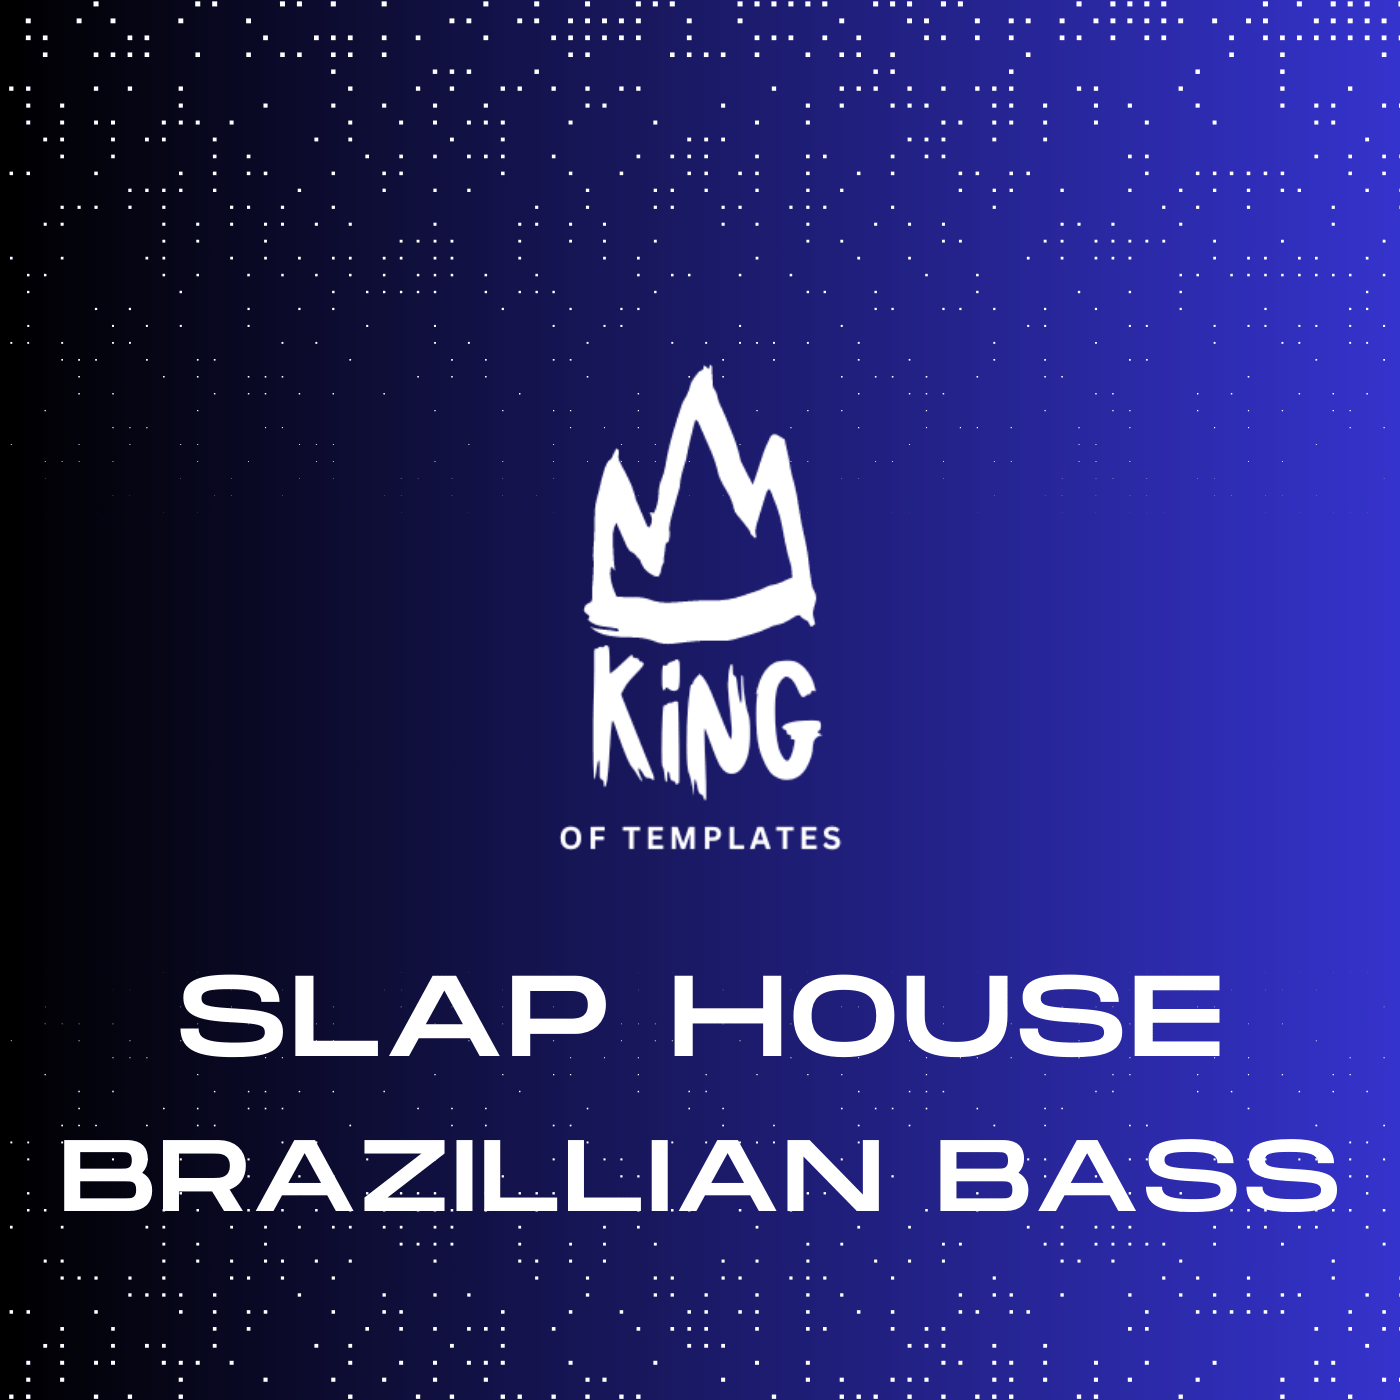 Slap house / Brazillian Bass Template (Complete track) - King of Templates - Tunebat Marketplace